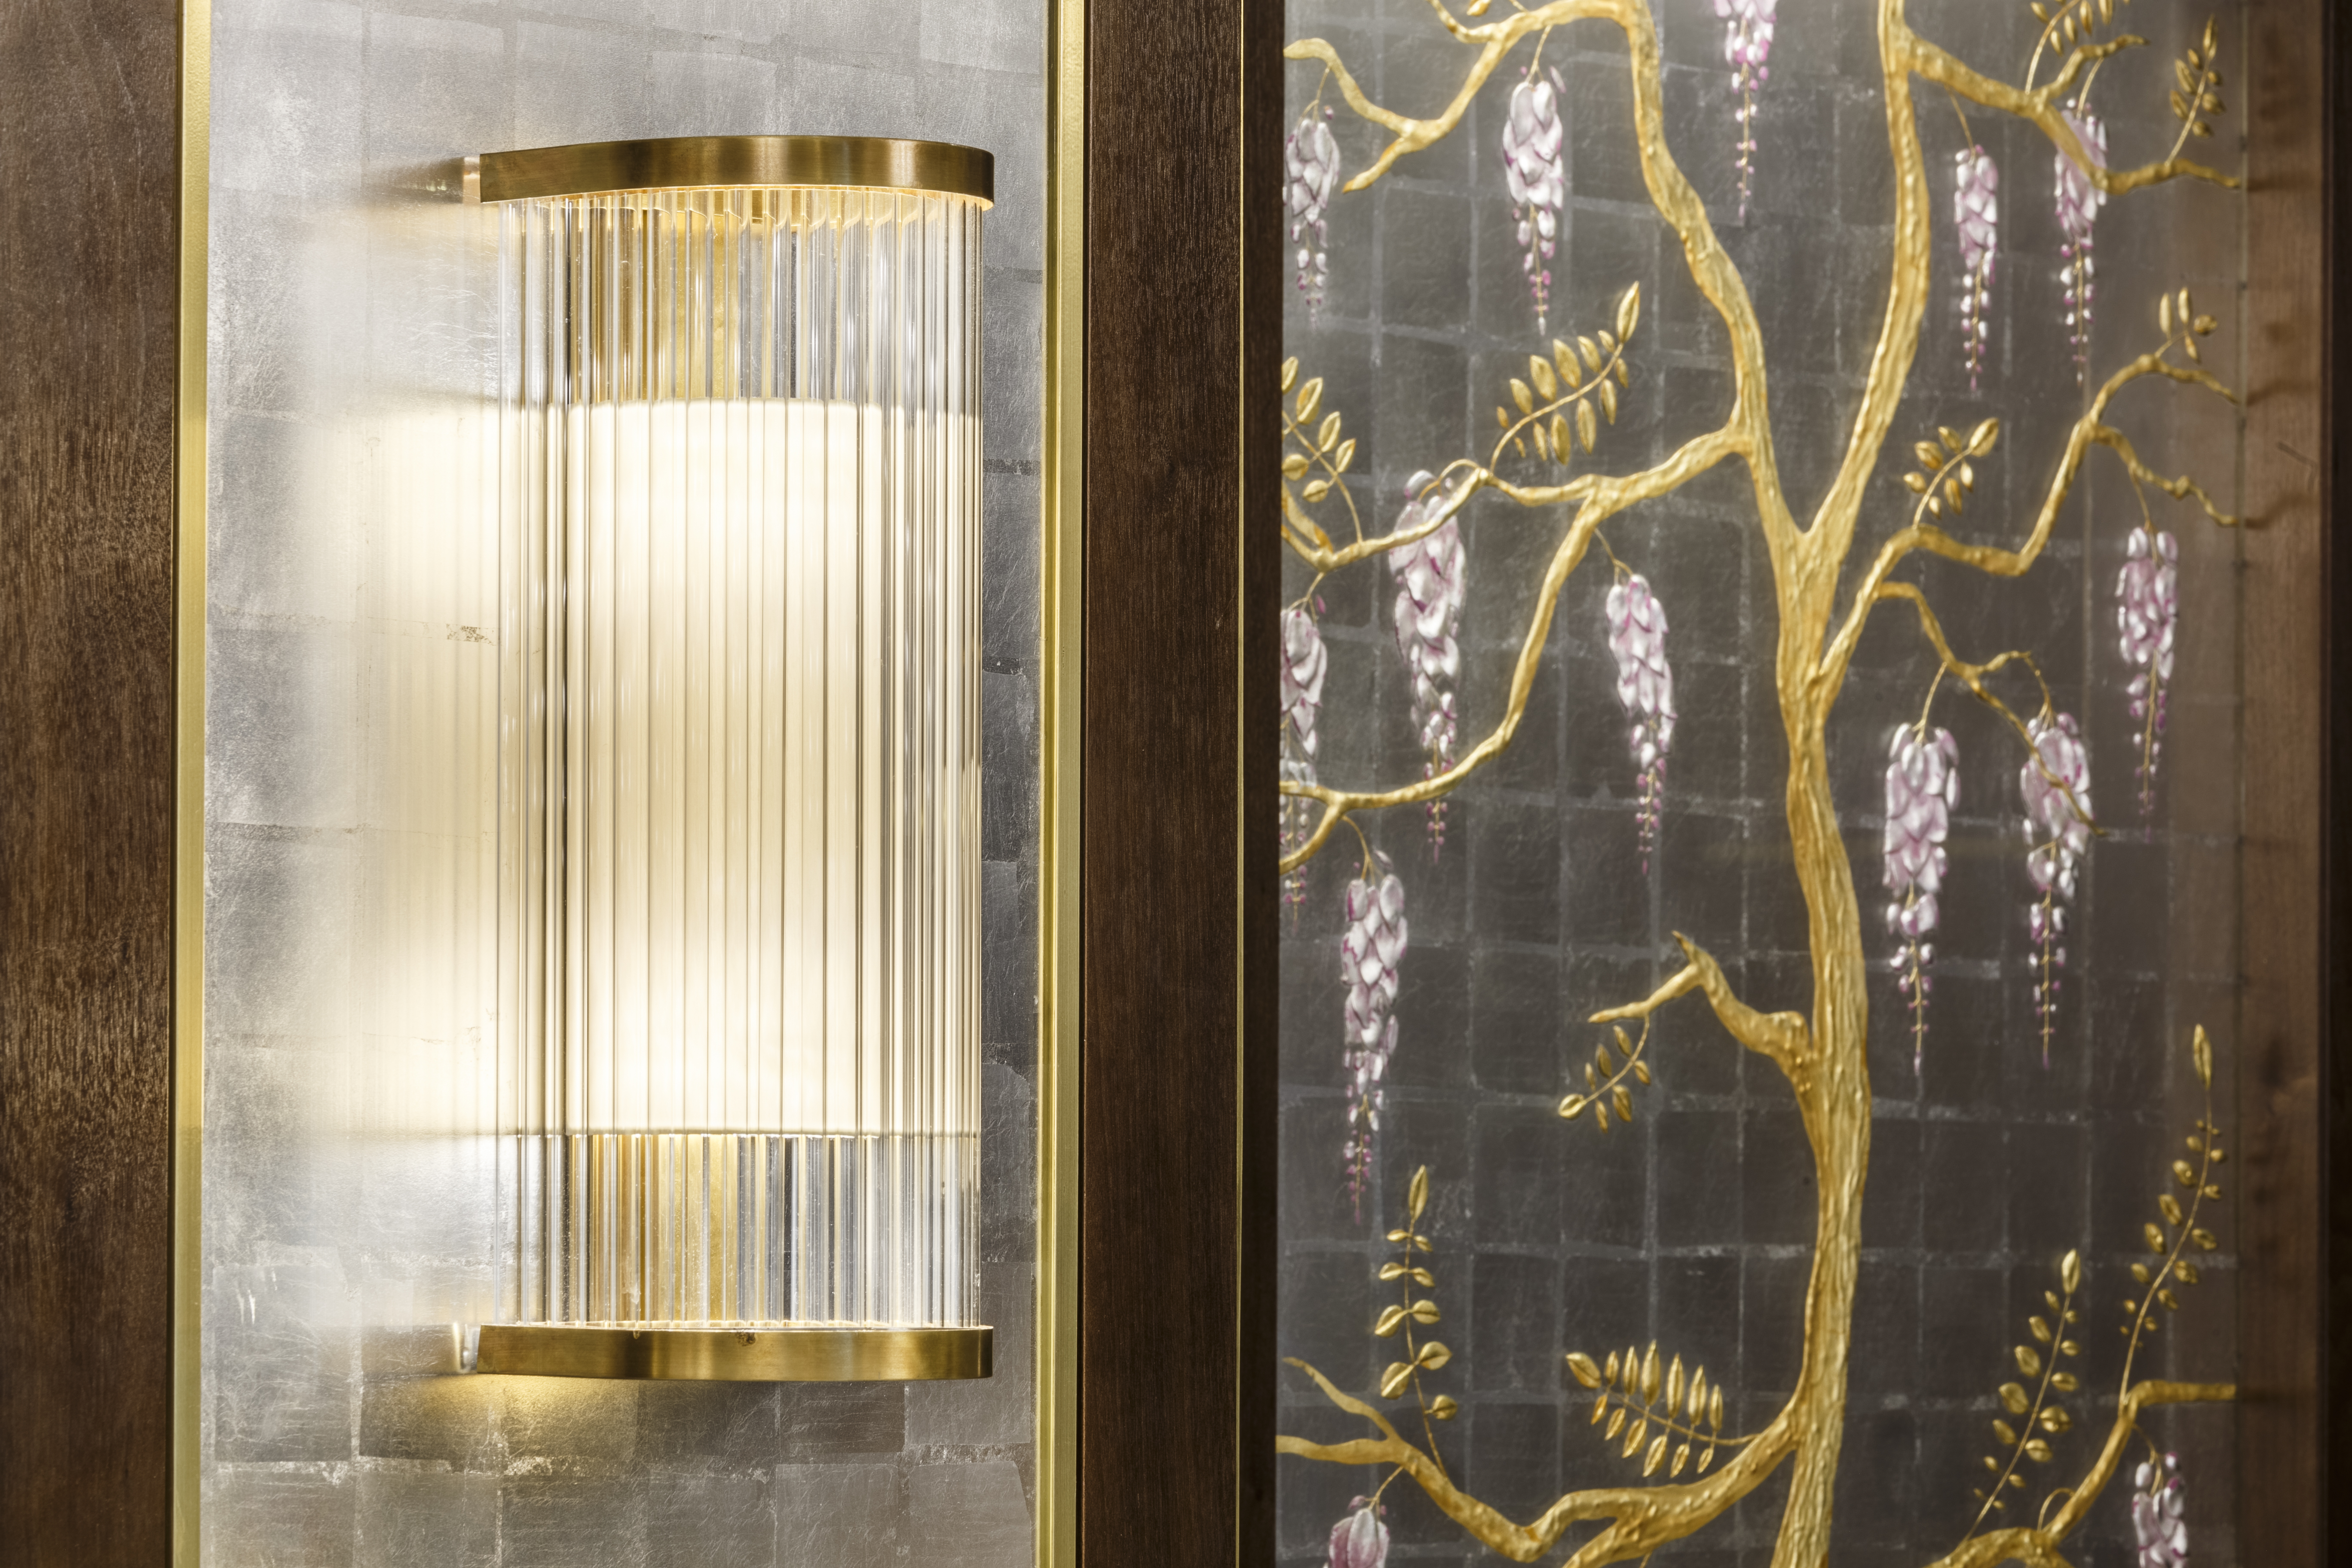 Lobby lighting and wisteria illustration artist inset panel